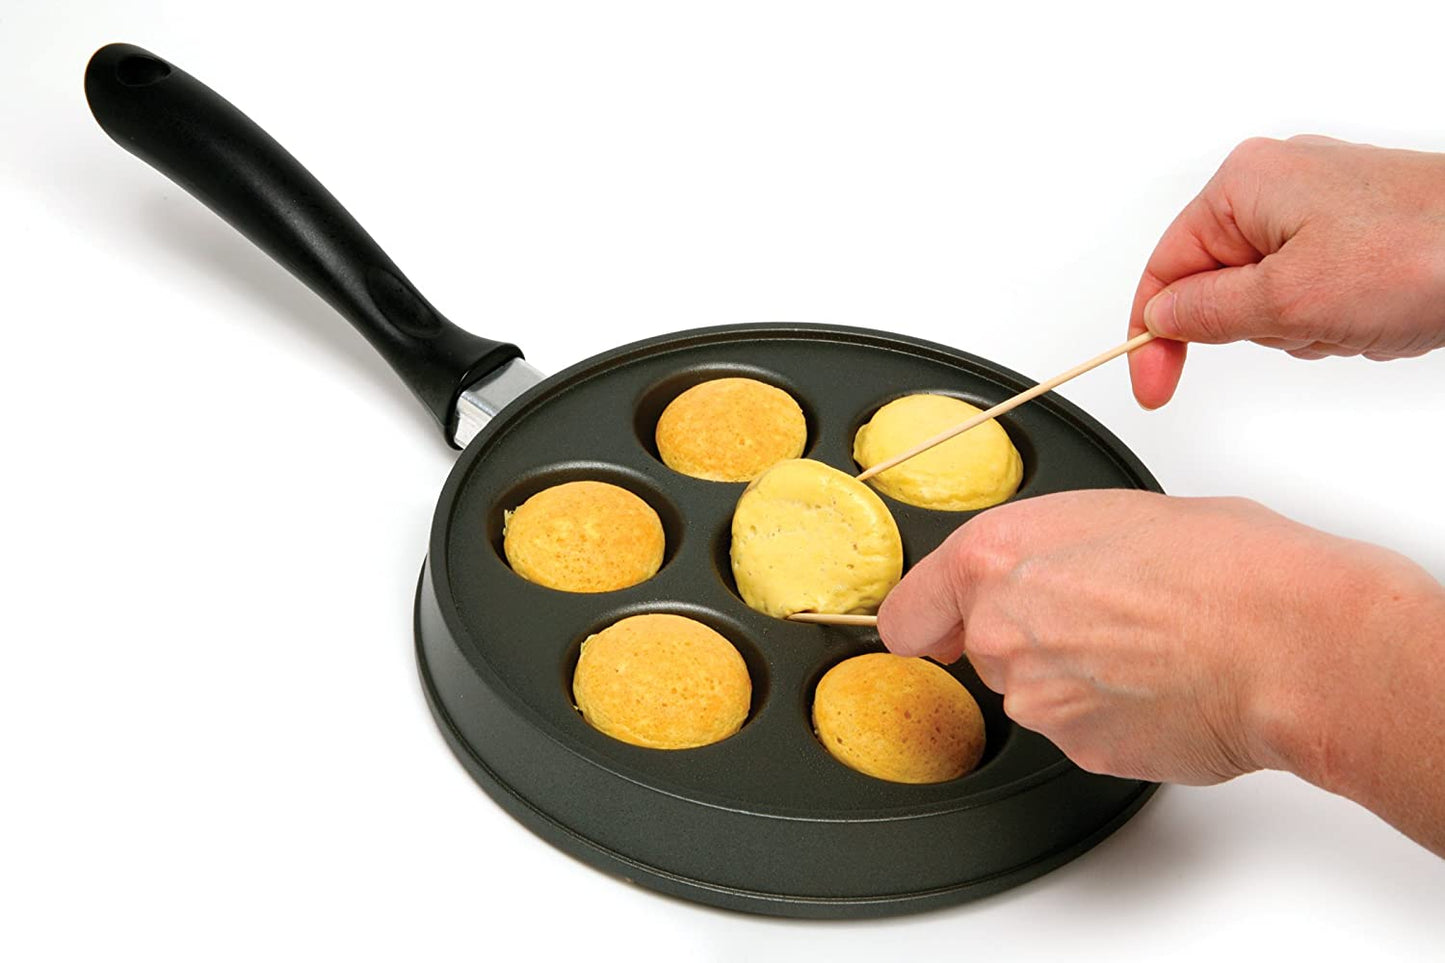 Norpro Nonstick Stuffed Pancake Pan, Munk / Aebleskiver / Ebelskiver 9in/23cm in diameter and 2.75in/7cm deep